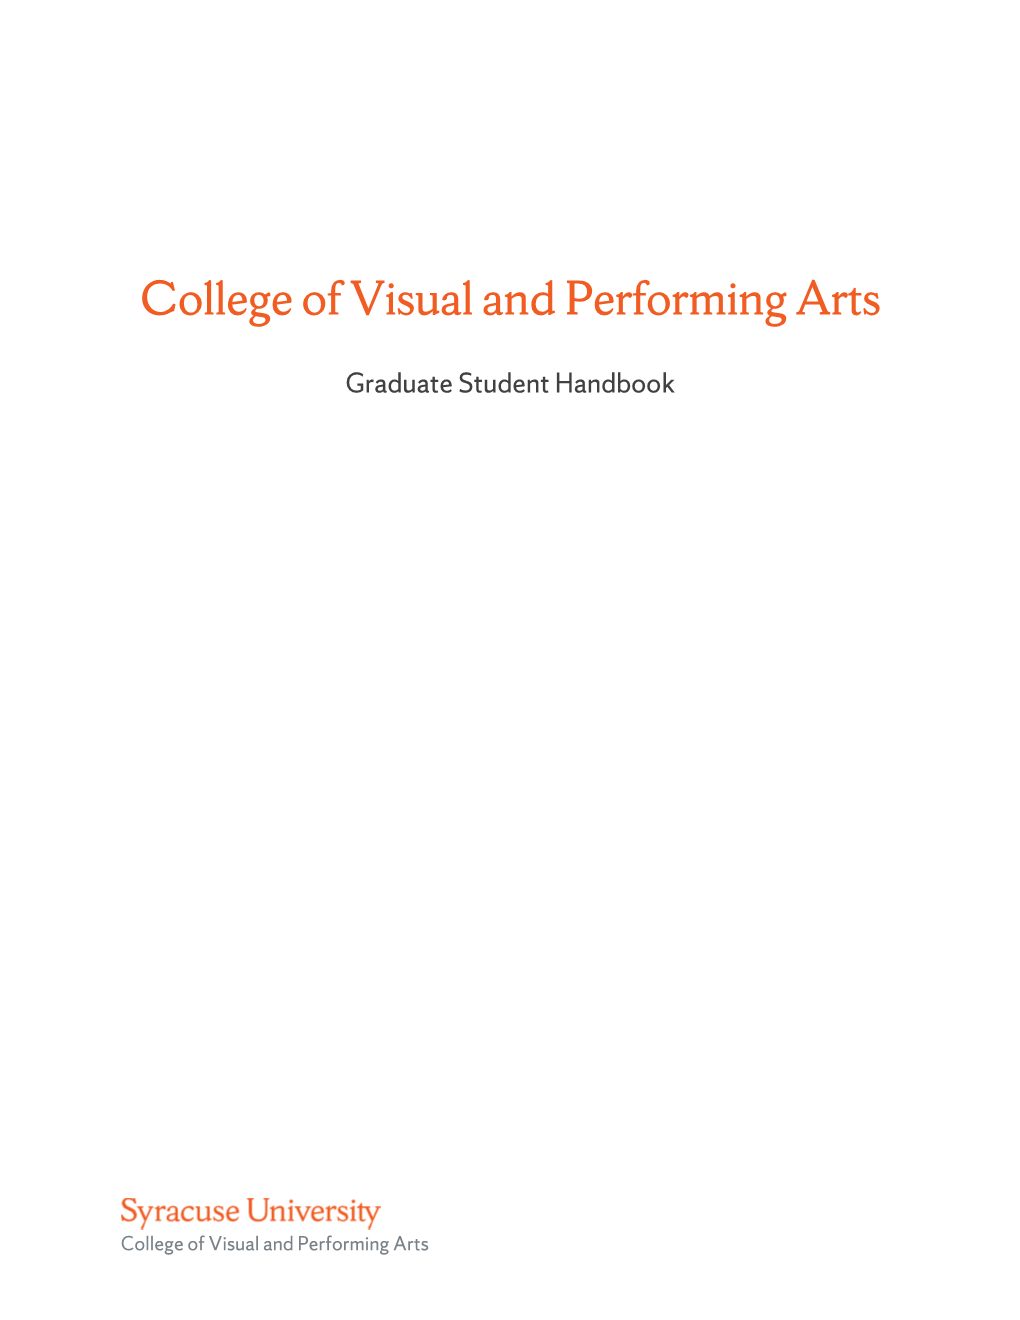 CVPA Graduate Student Handbook